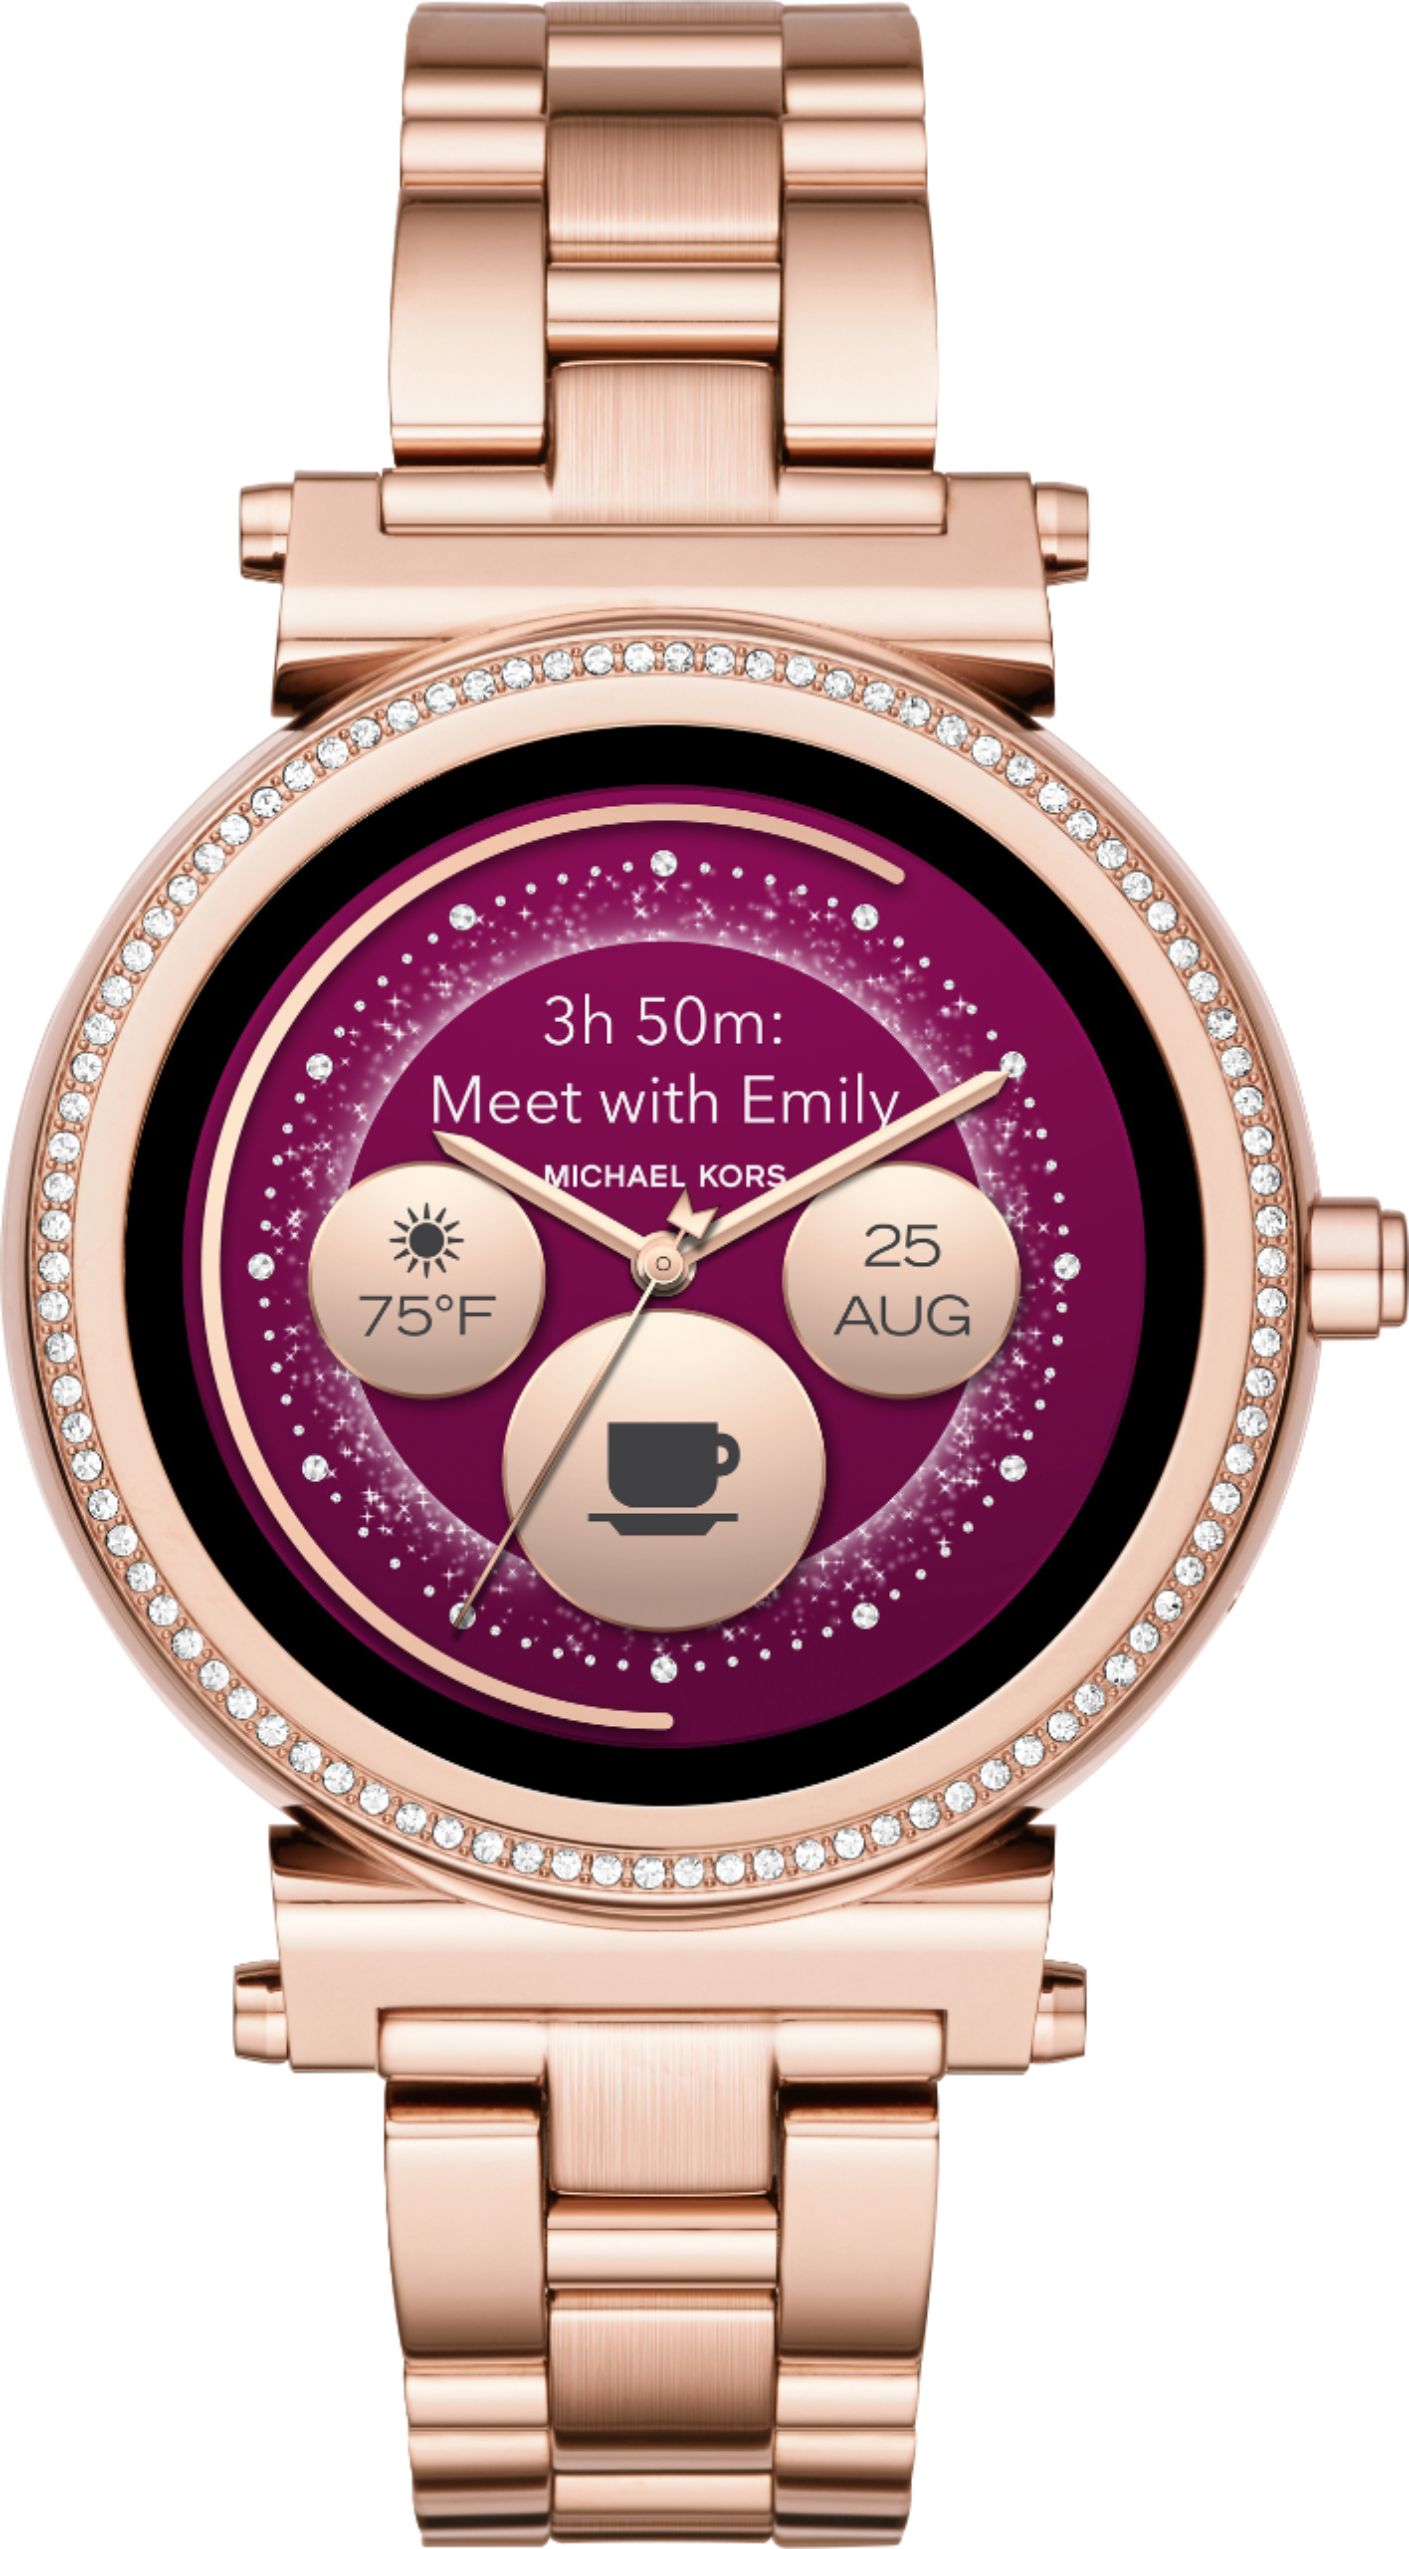 michael kors smartwatch rose gold best buy